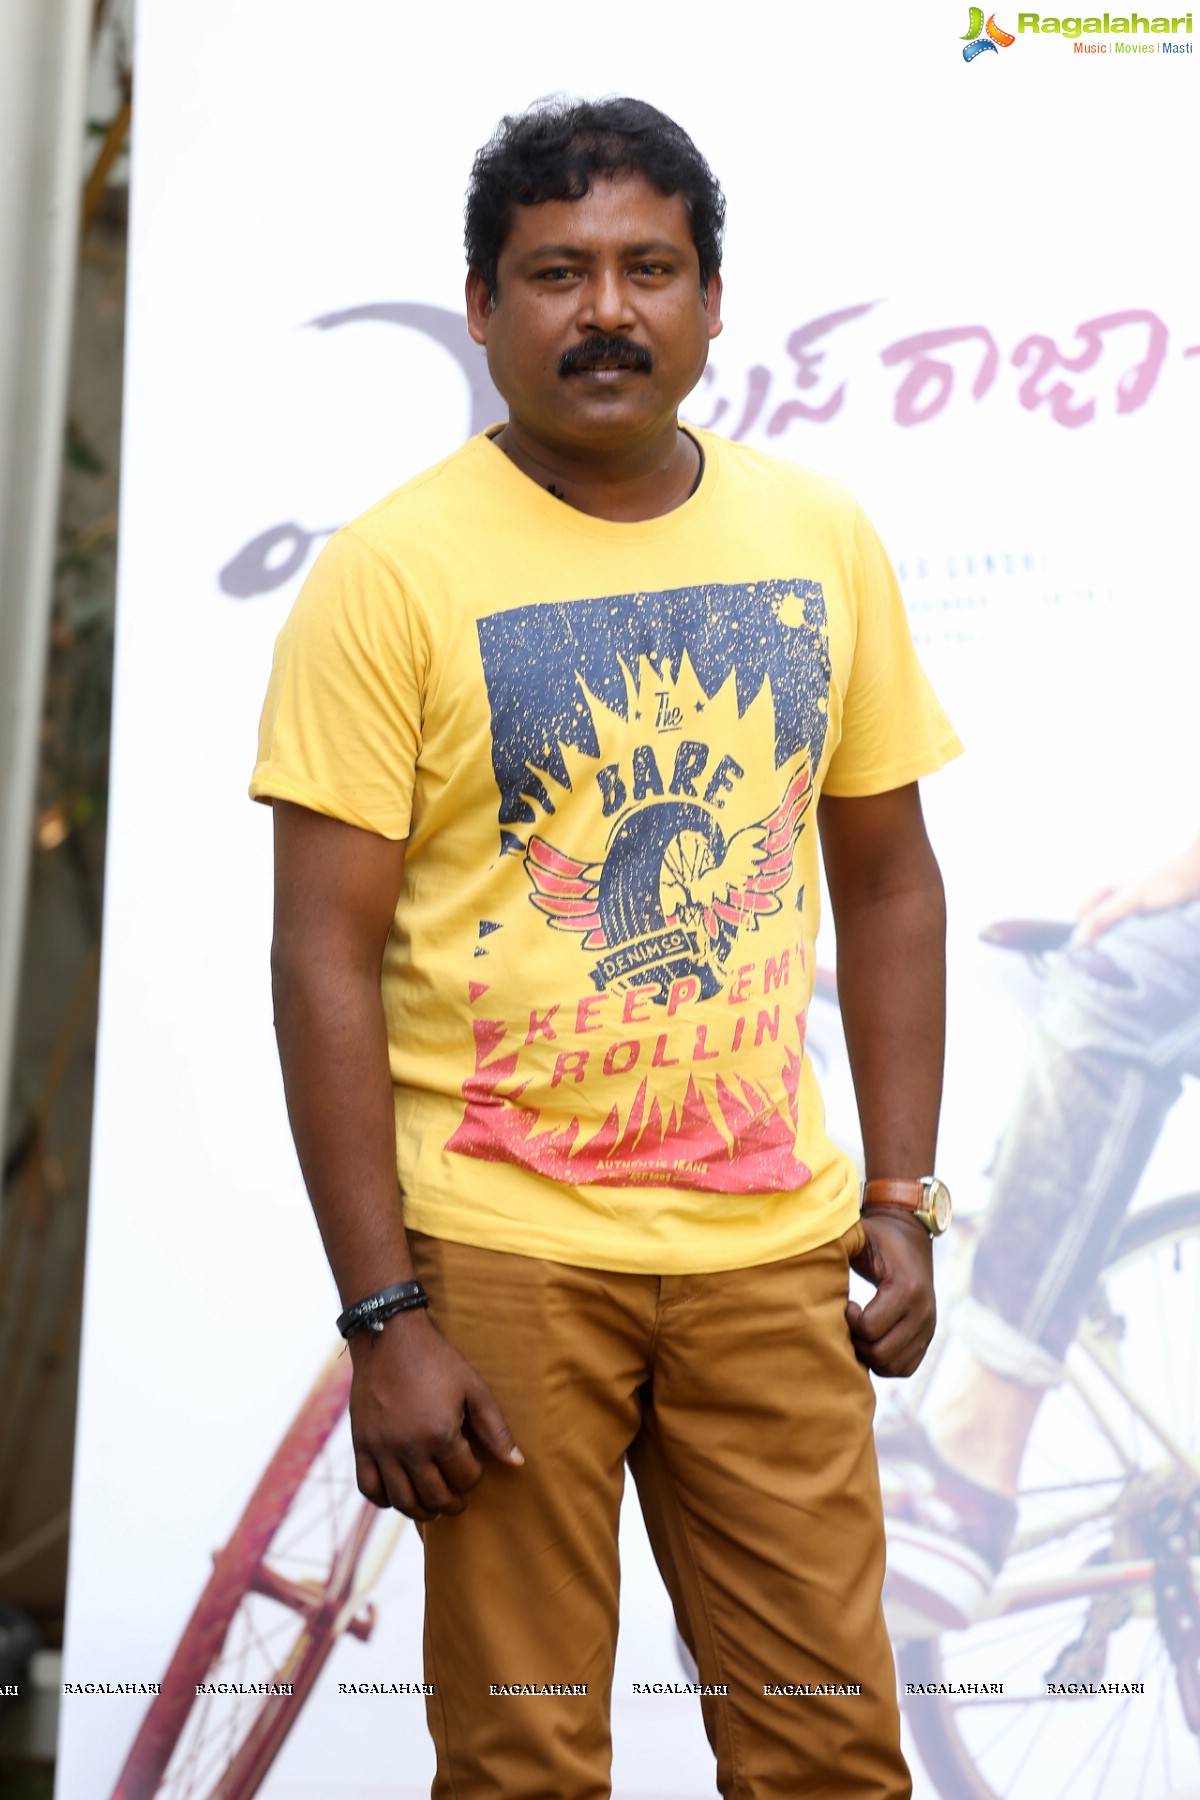 Ram Pothineni at 91.1 FM Radio City, Hyderabad